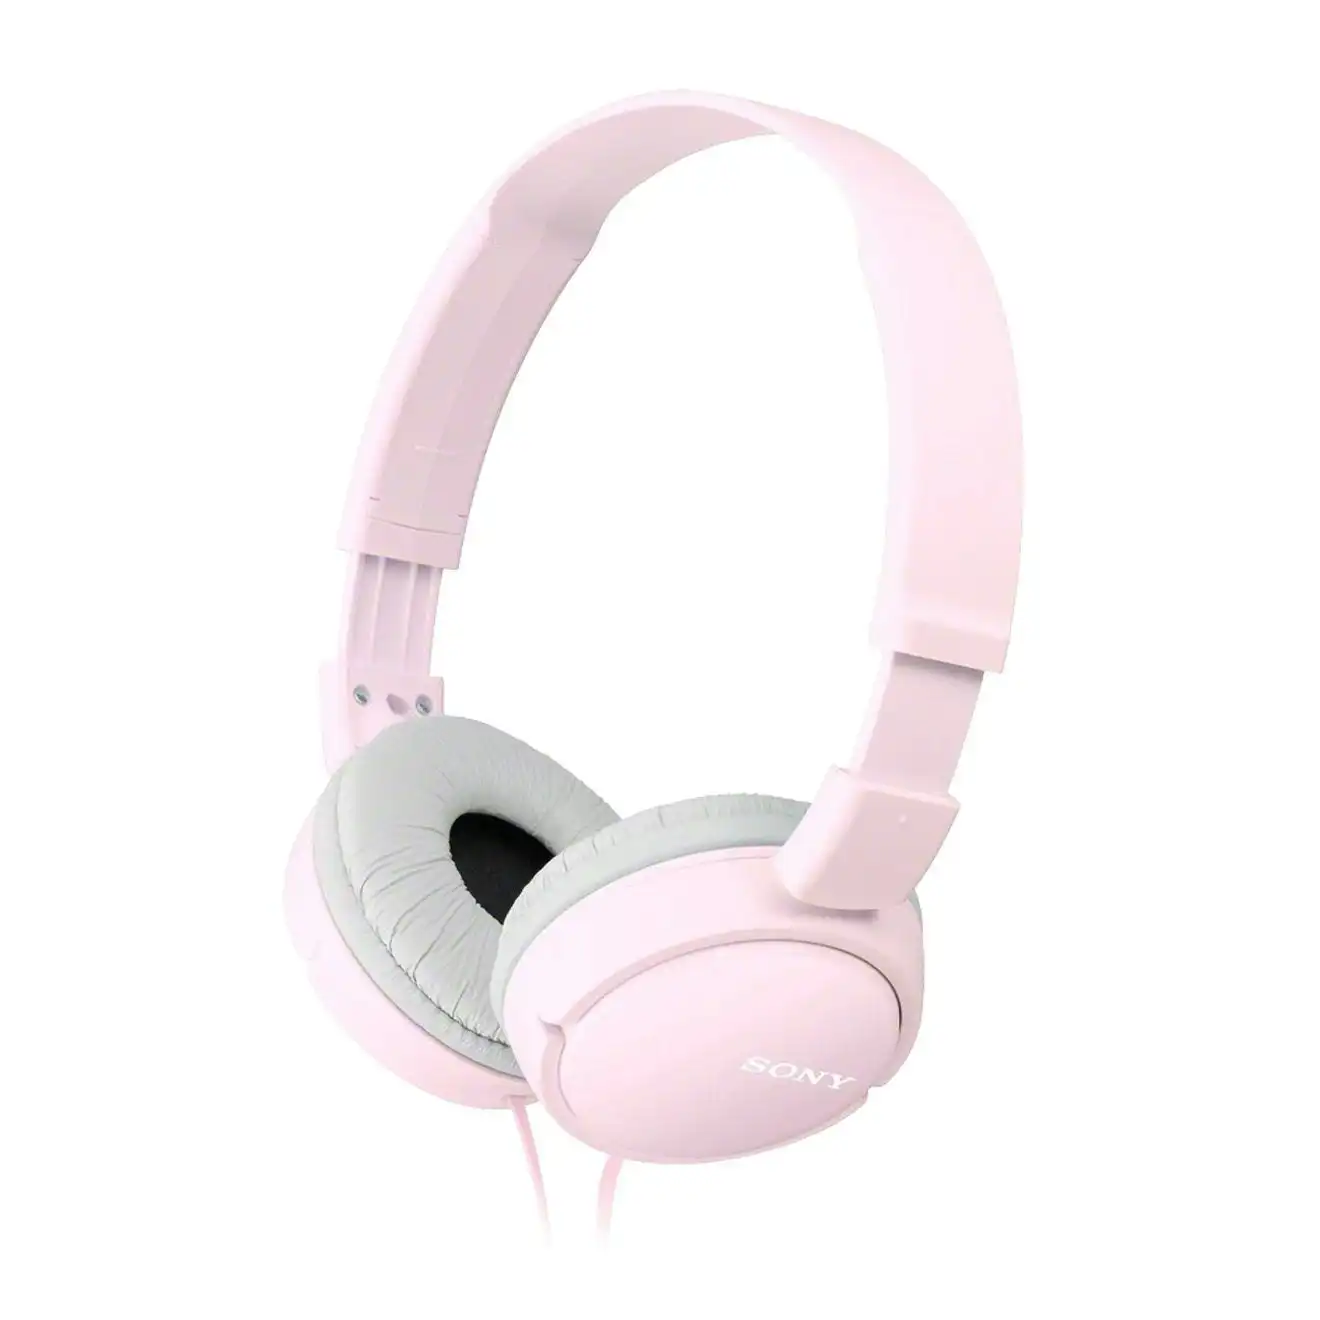 Sony MDR-ZX110 Overhead Headphones - Pink